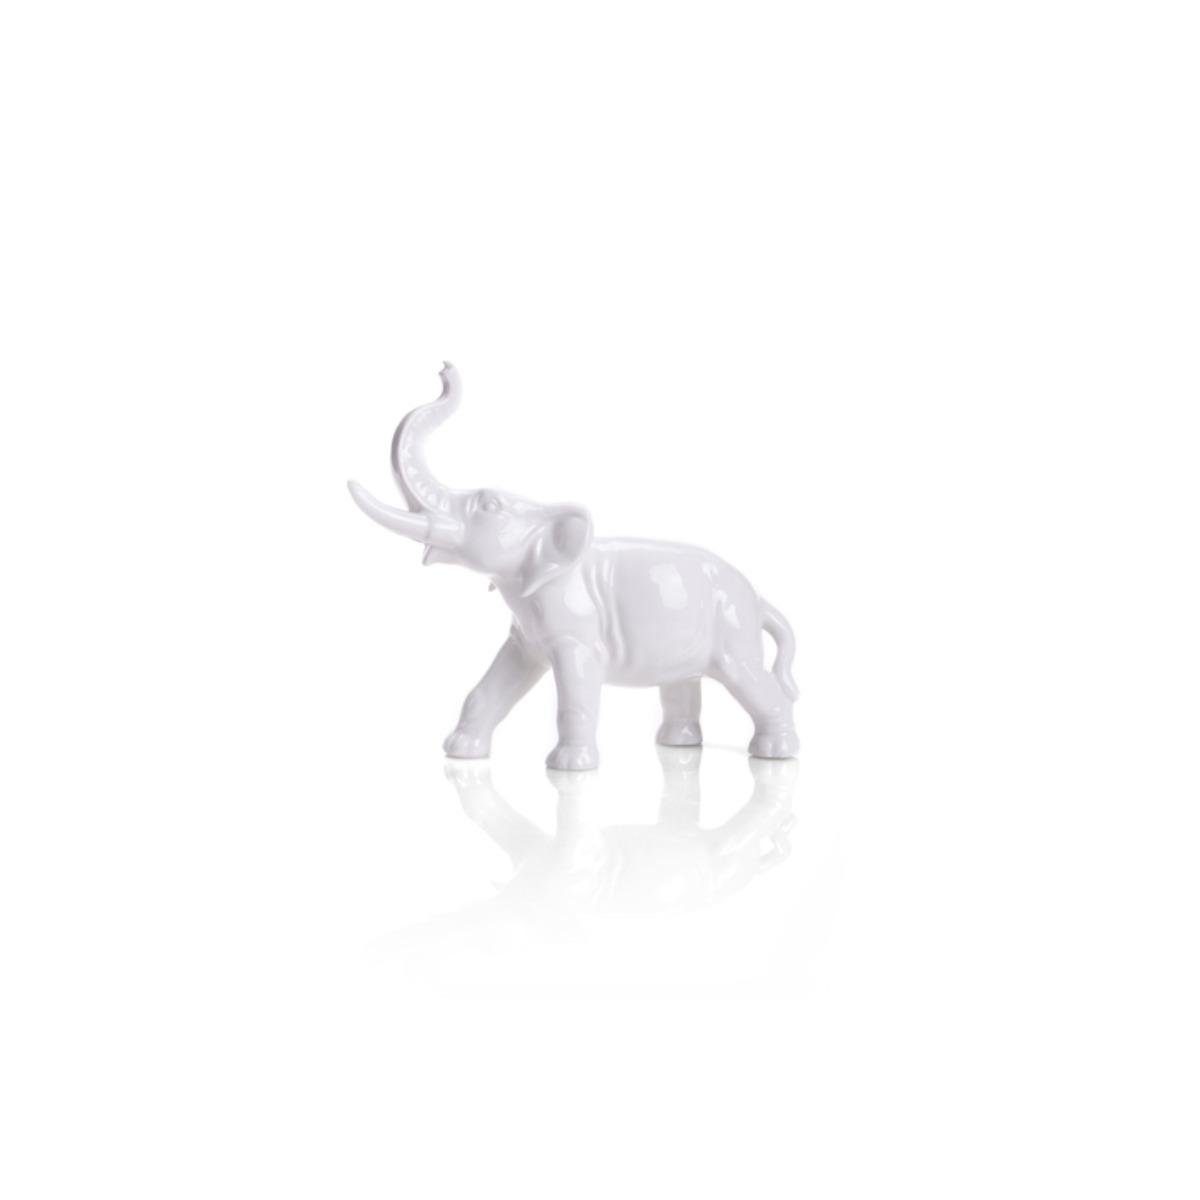 Wagner & Apel Porzellan Dekofigur 1261 W - Porzellan - Elefant, klein